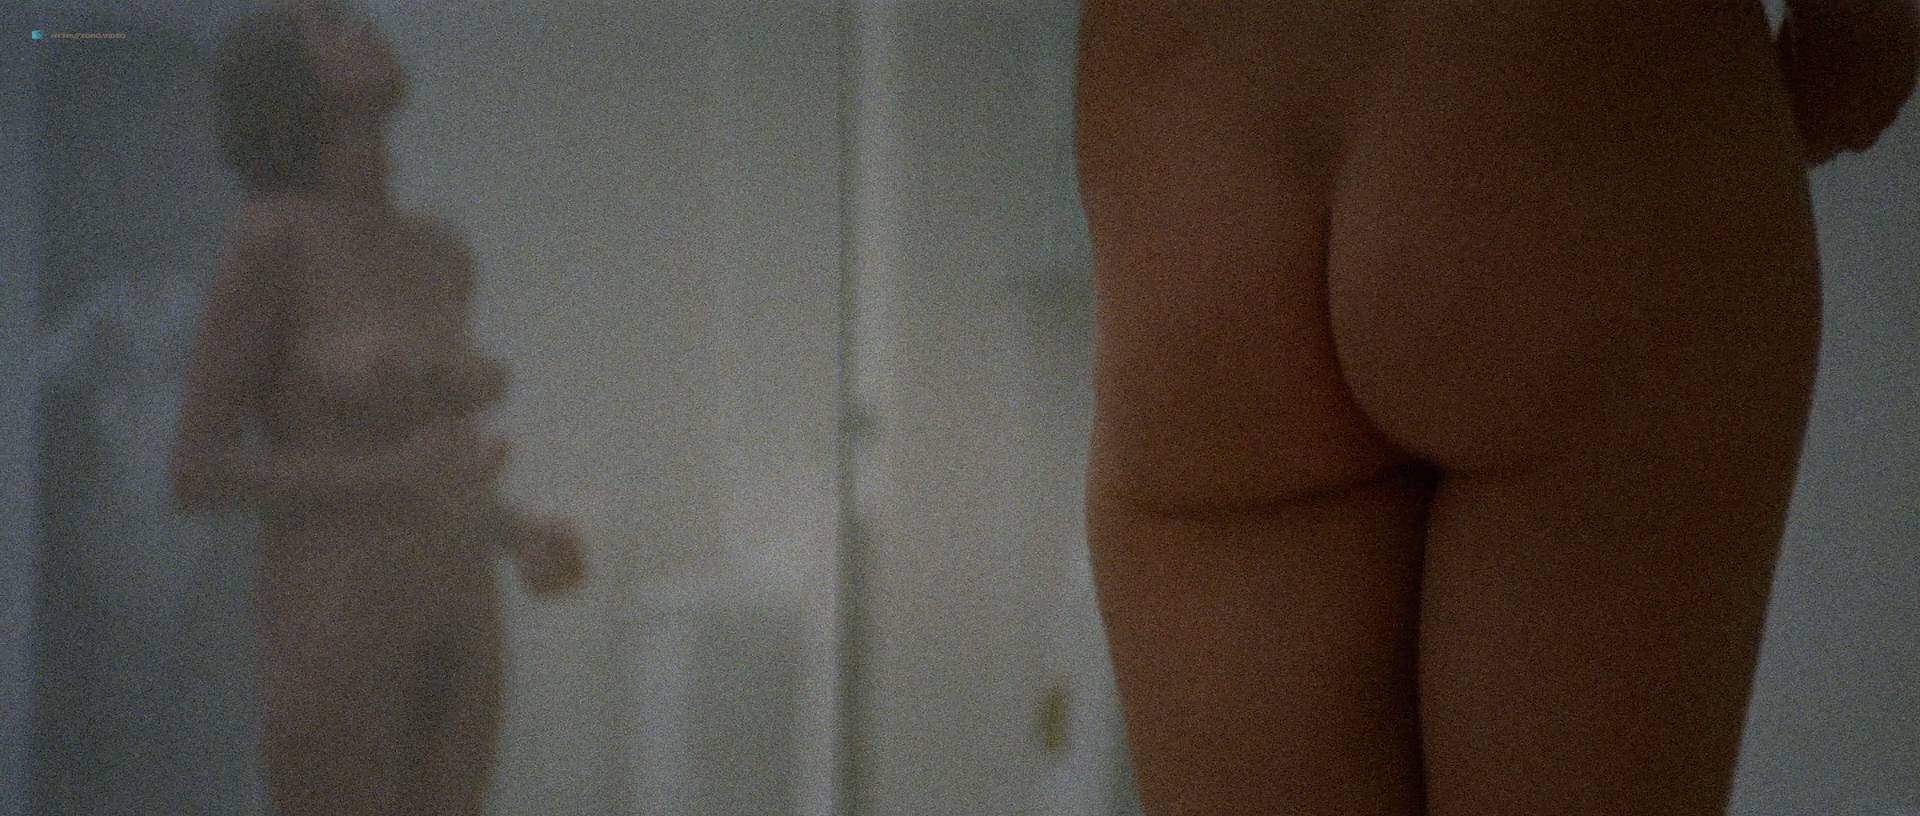 Susannah York nude pics.